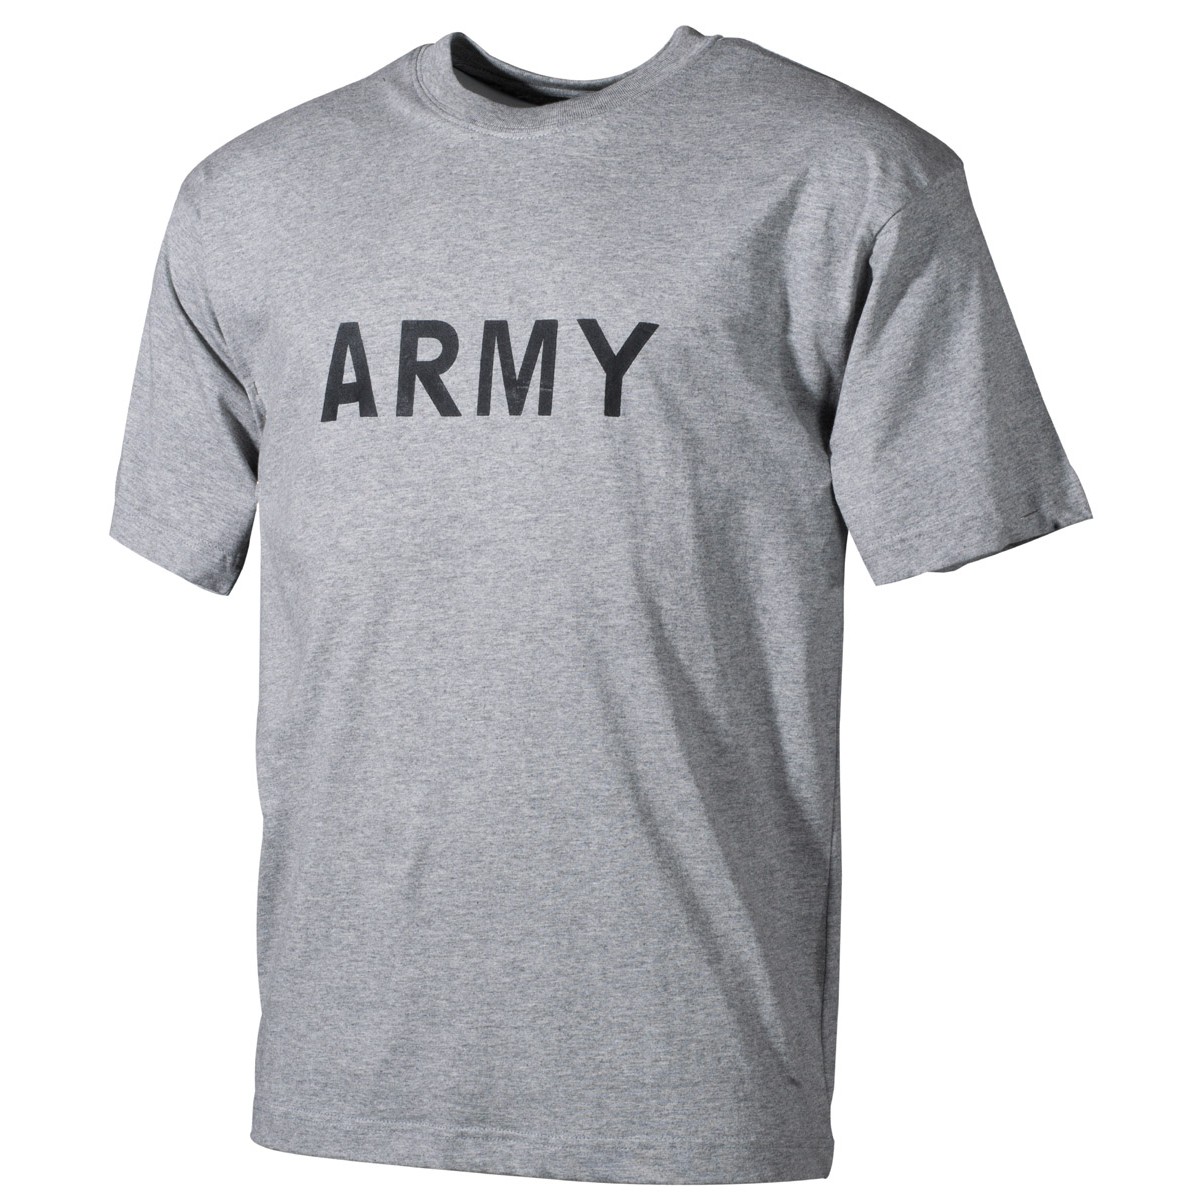 Купить футболку s. Майка Army USA. Футболка Continental Army мужская. Футболка Army USA. Американская армейская футболка.